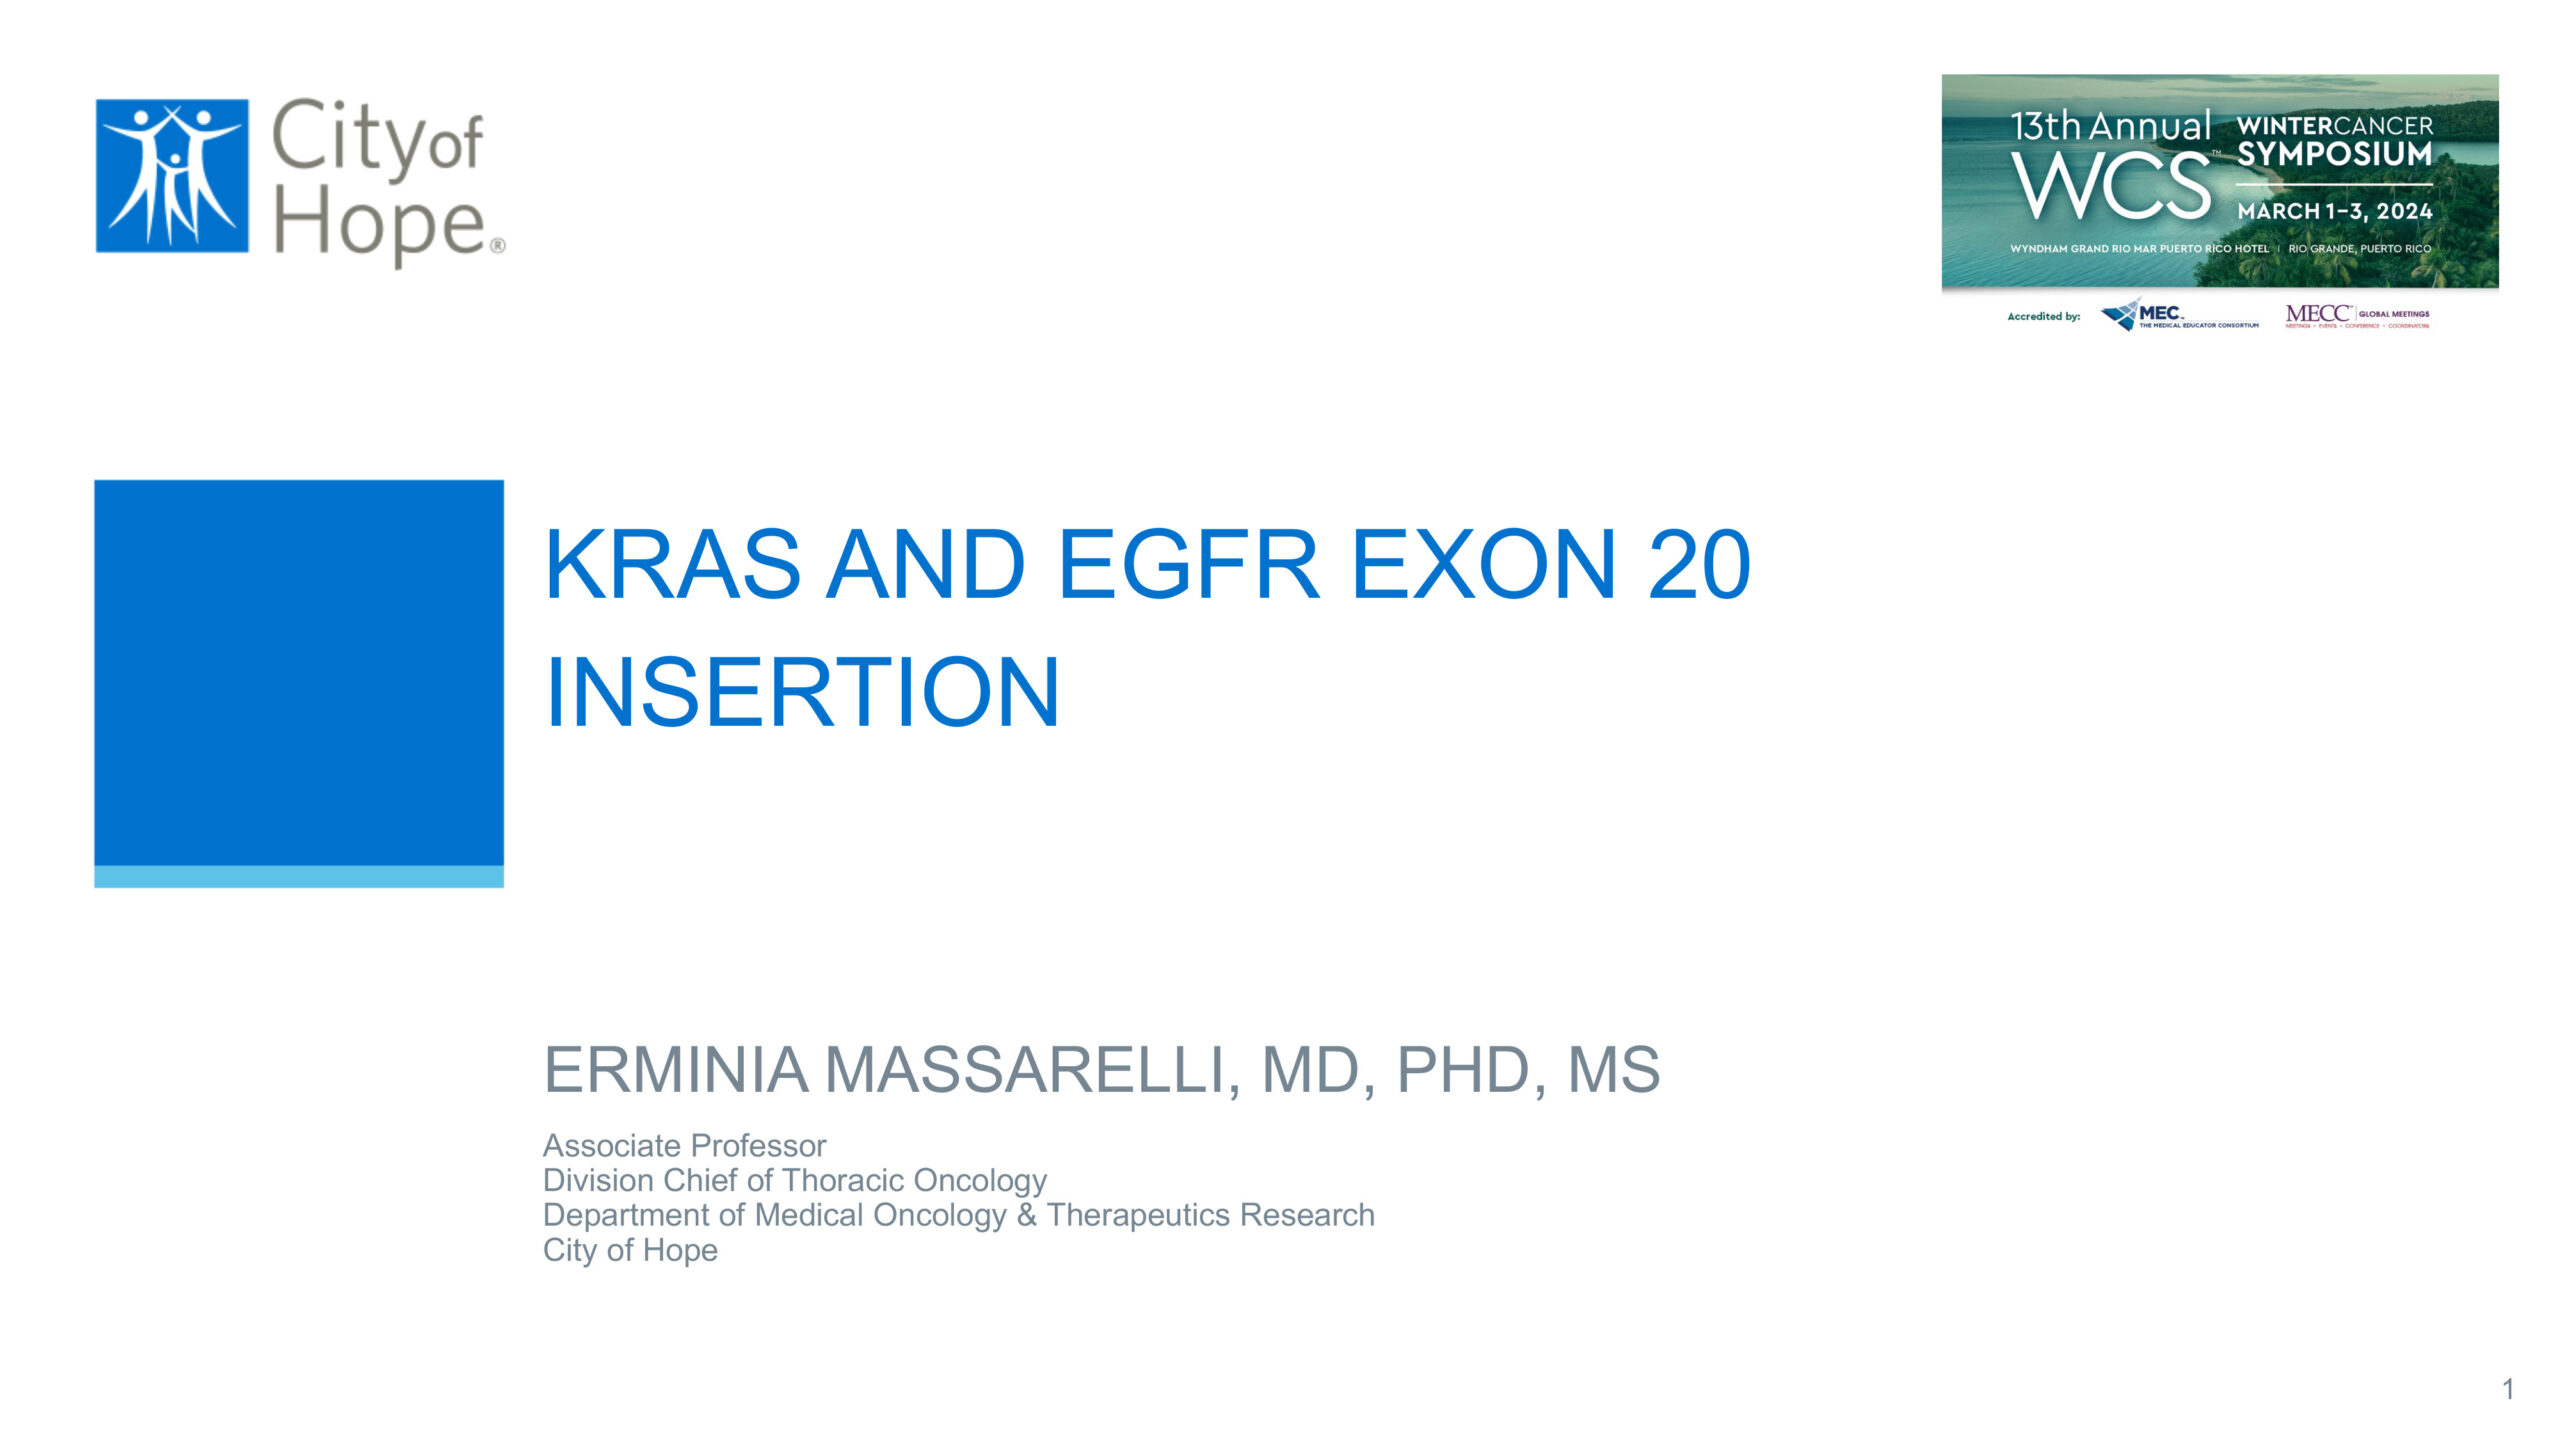 KRAS and EGFR Exon 20 Insertion